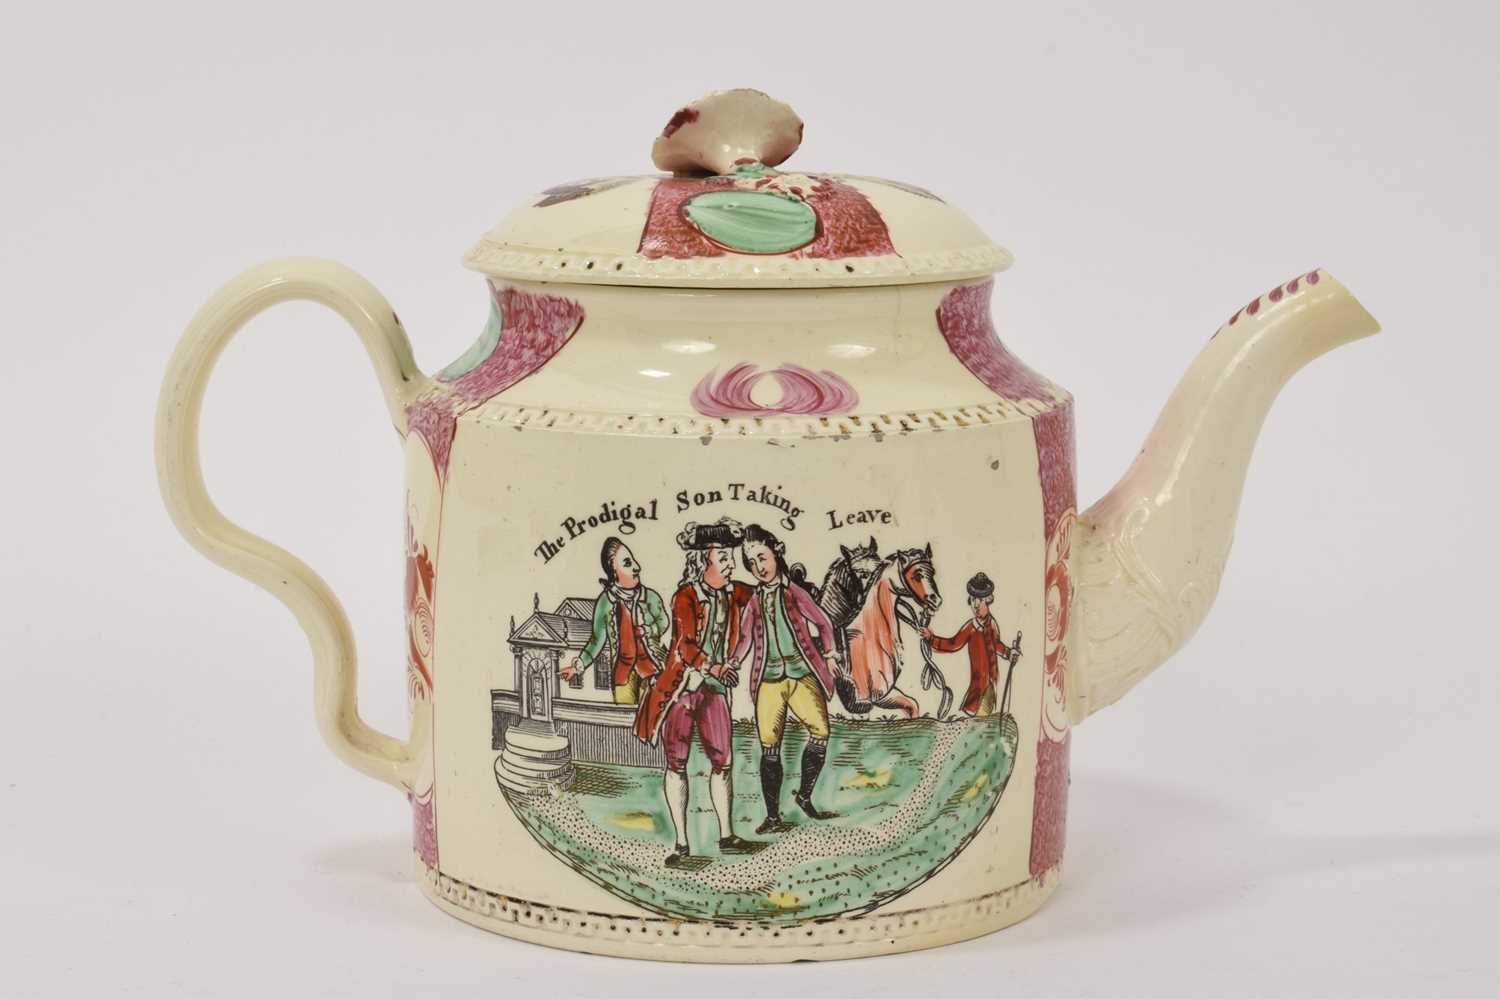 18th century creamware teapot by William Greatbatch - The prodigal son taking leave - Bild 3 aus 8